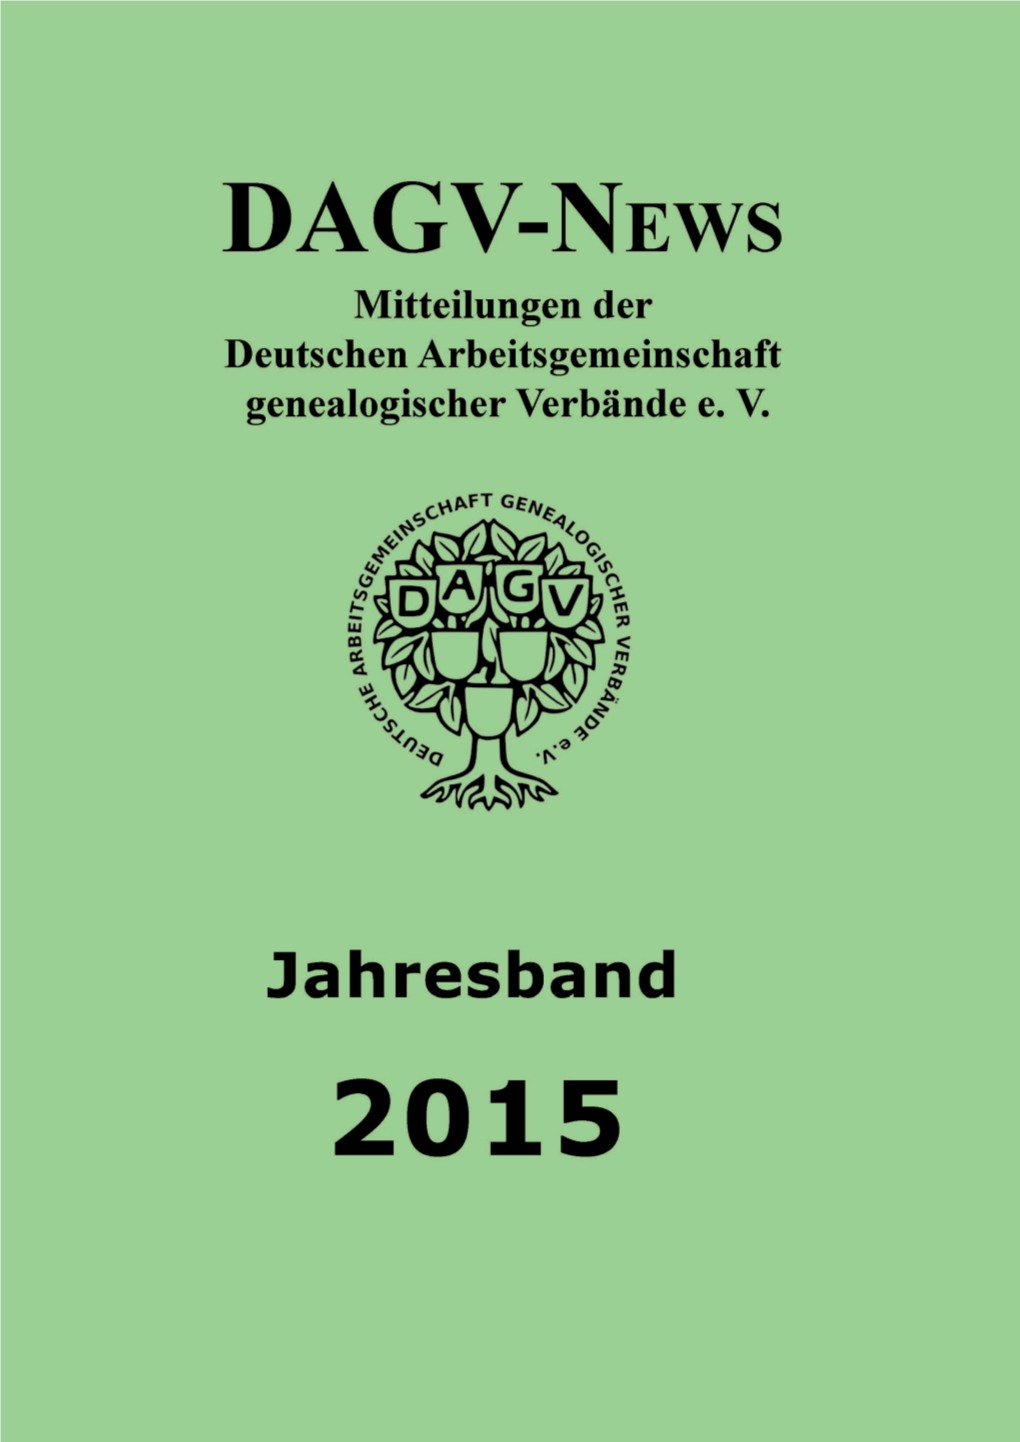 DAGV-News Jahresband 2015 5